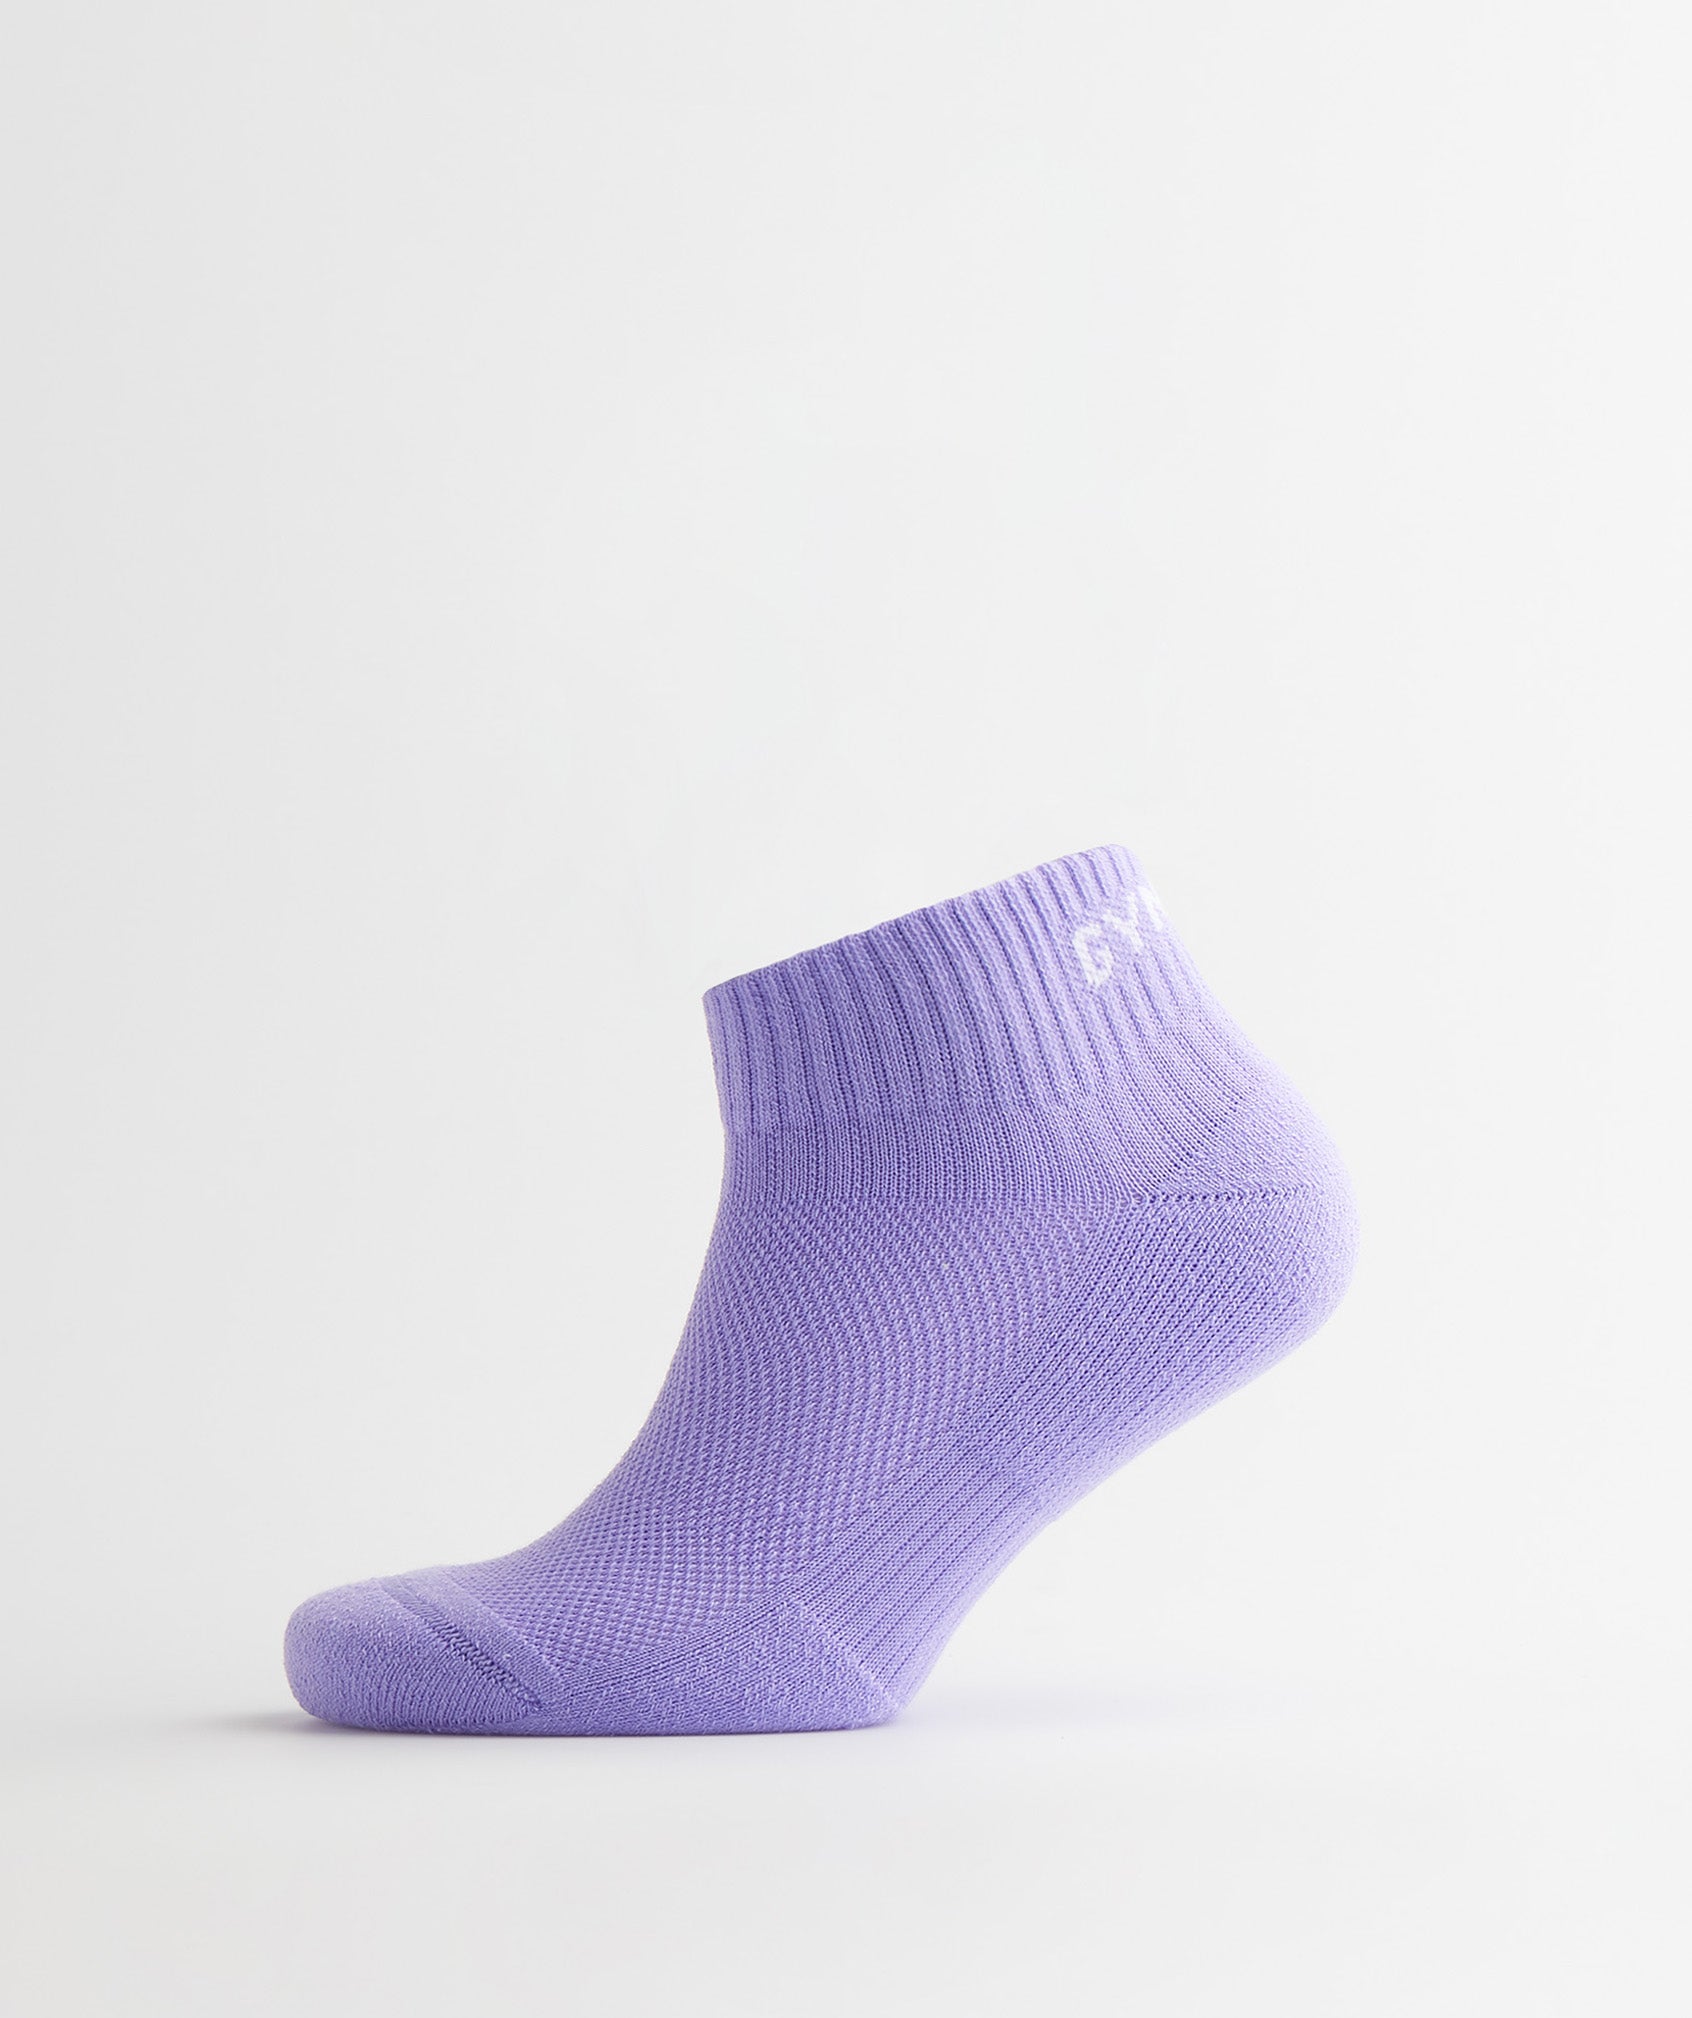 Jacquard Quarter Socks 3Pk in Aqua Blue/Digital Violet/Meridian Blue